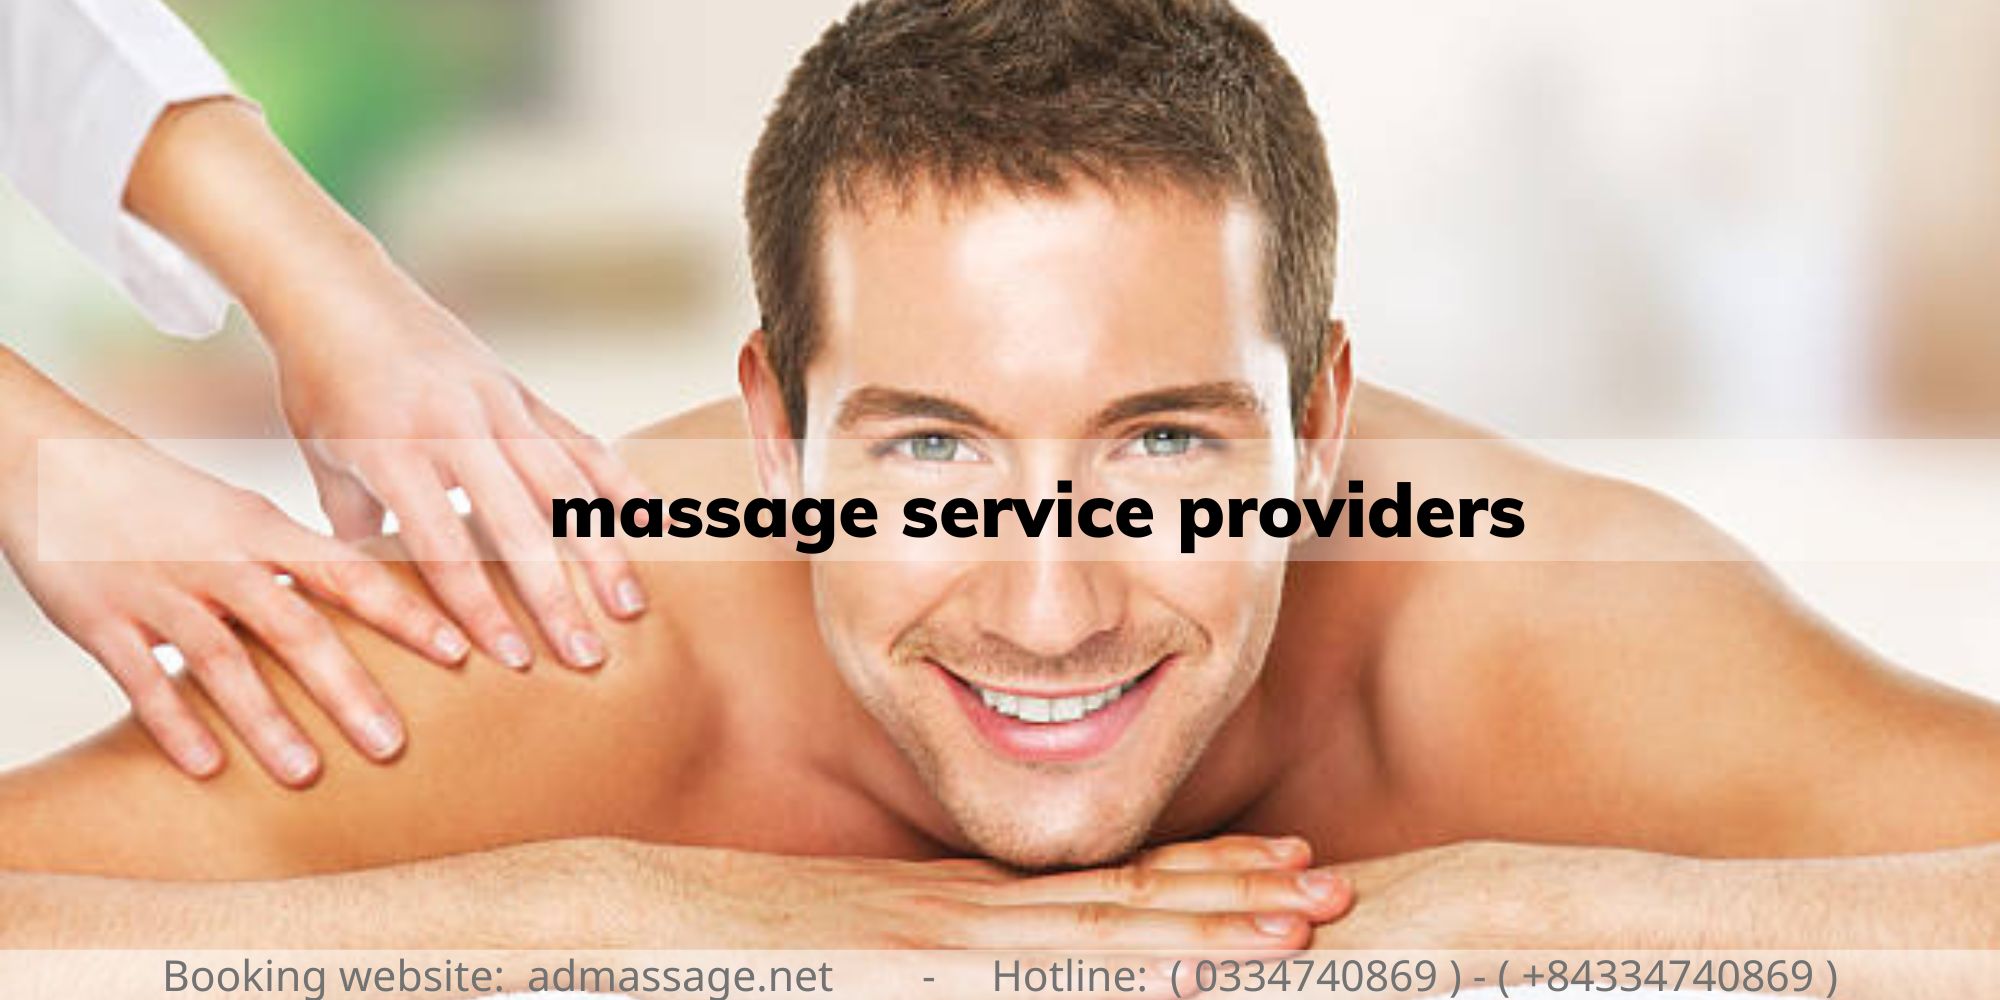 massage service providers